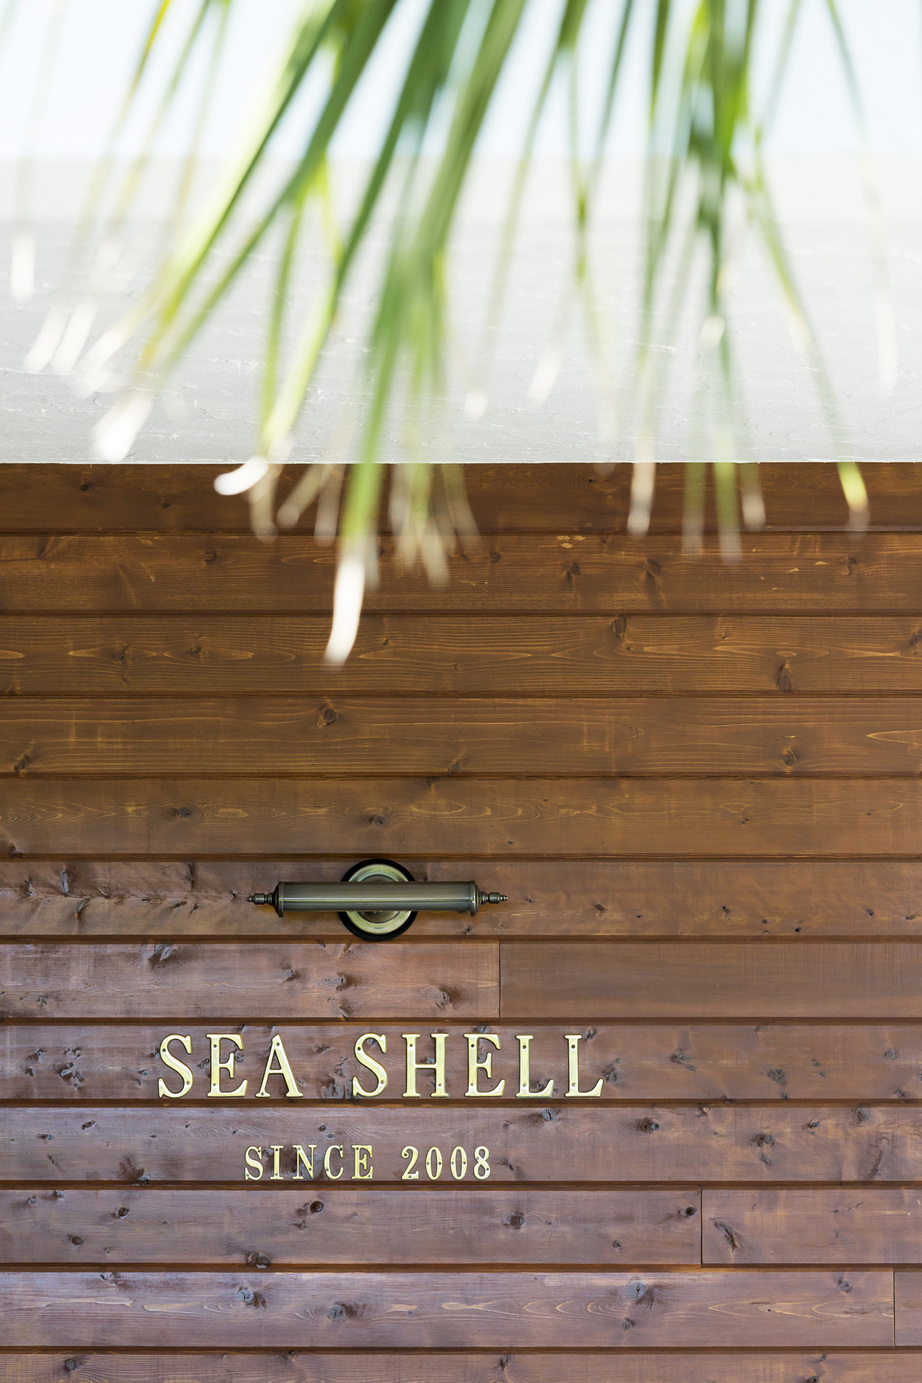 Hotel Sea Shellのnull